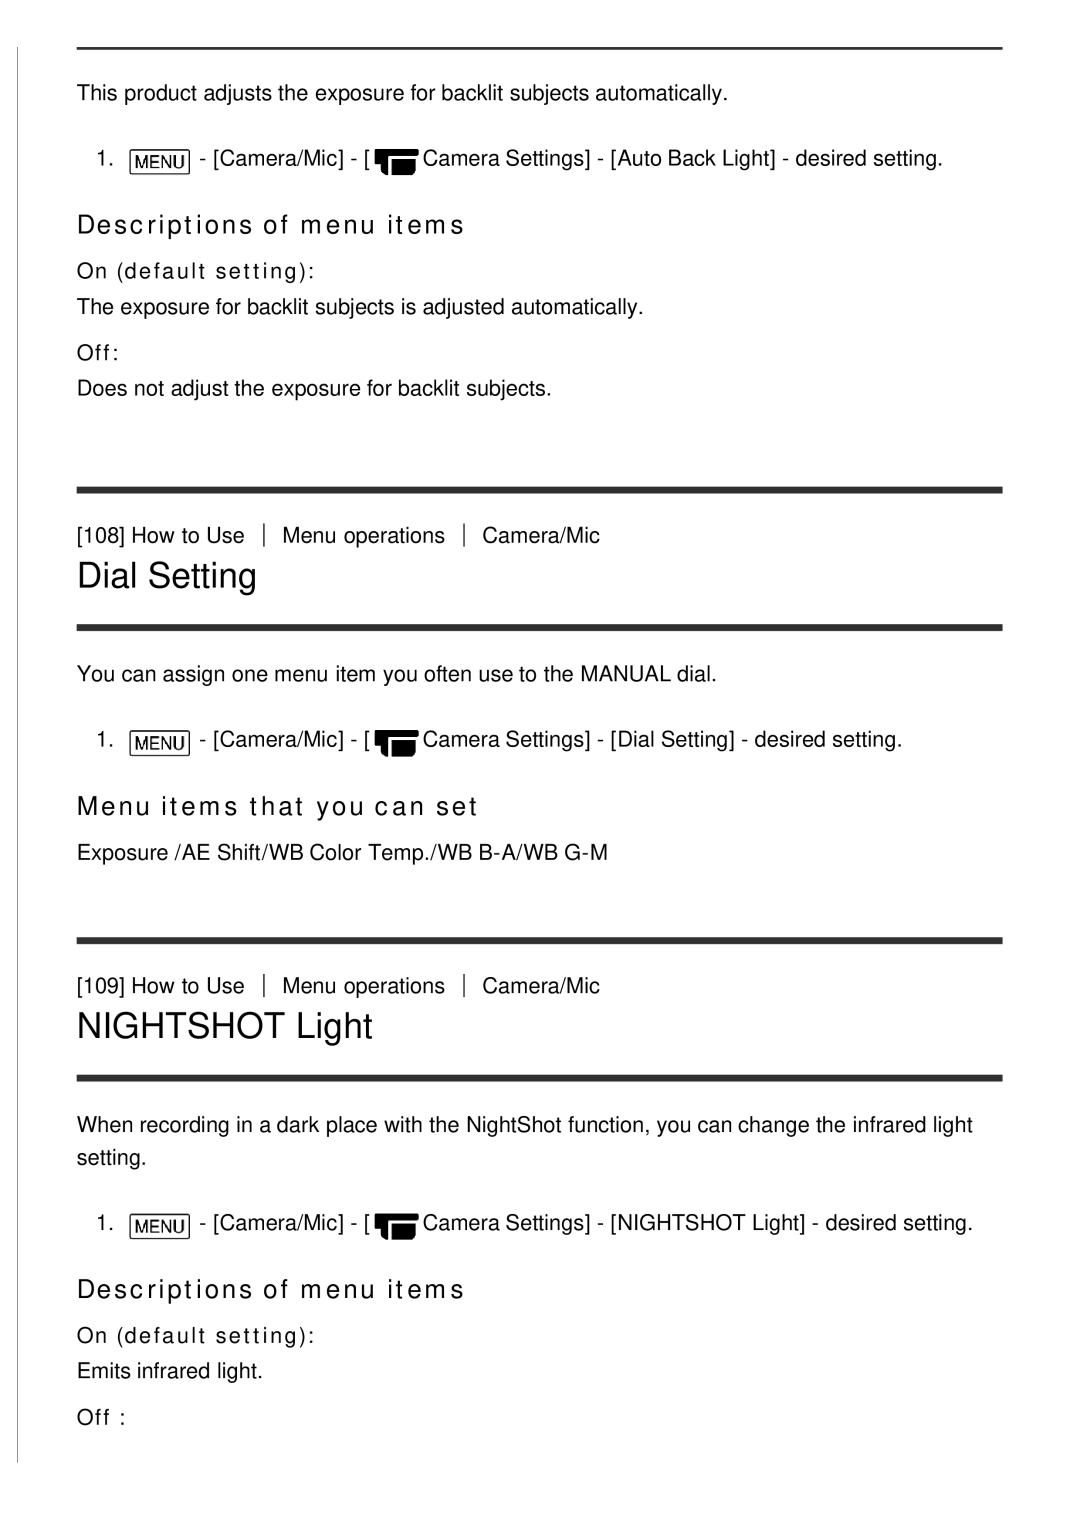 Sony FDR-AX100E Dial Setting, NIGHTSHOT Light, Menu items that you can set, Descriptions of menu items, On default setting 